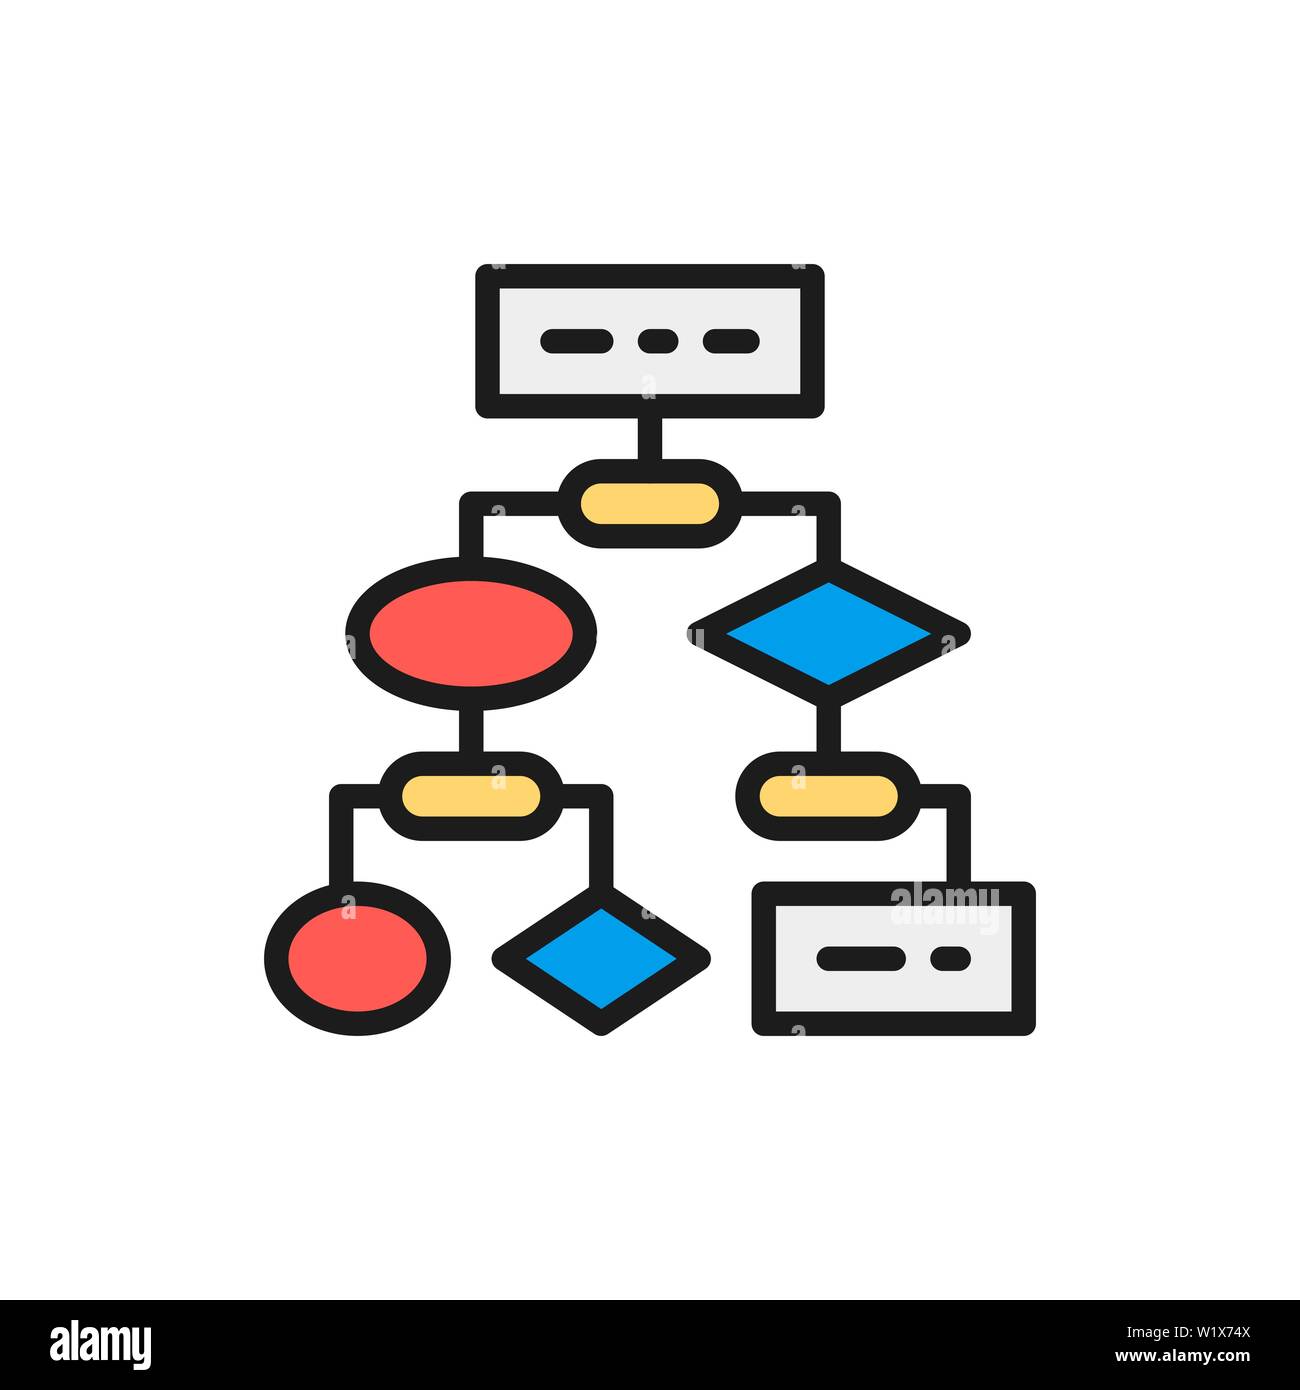 Color Blocks Logo Cliparts, Stock Vector and Royalty Free Color Blocks Logo  Illustrations